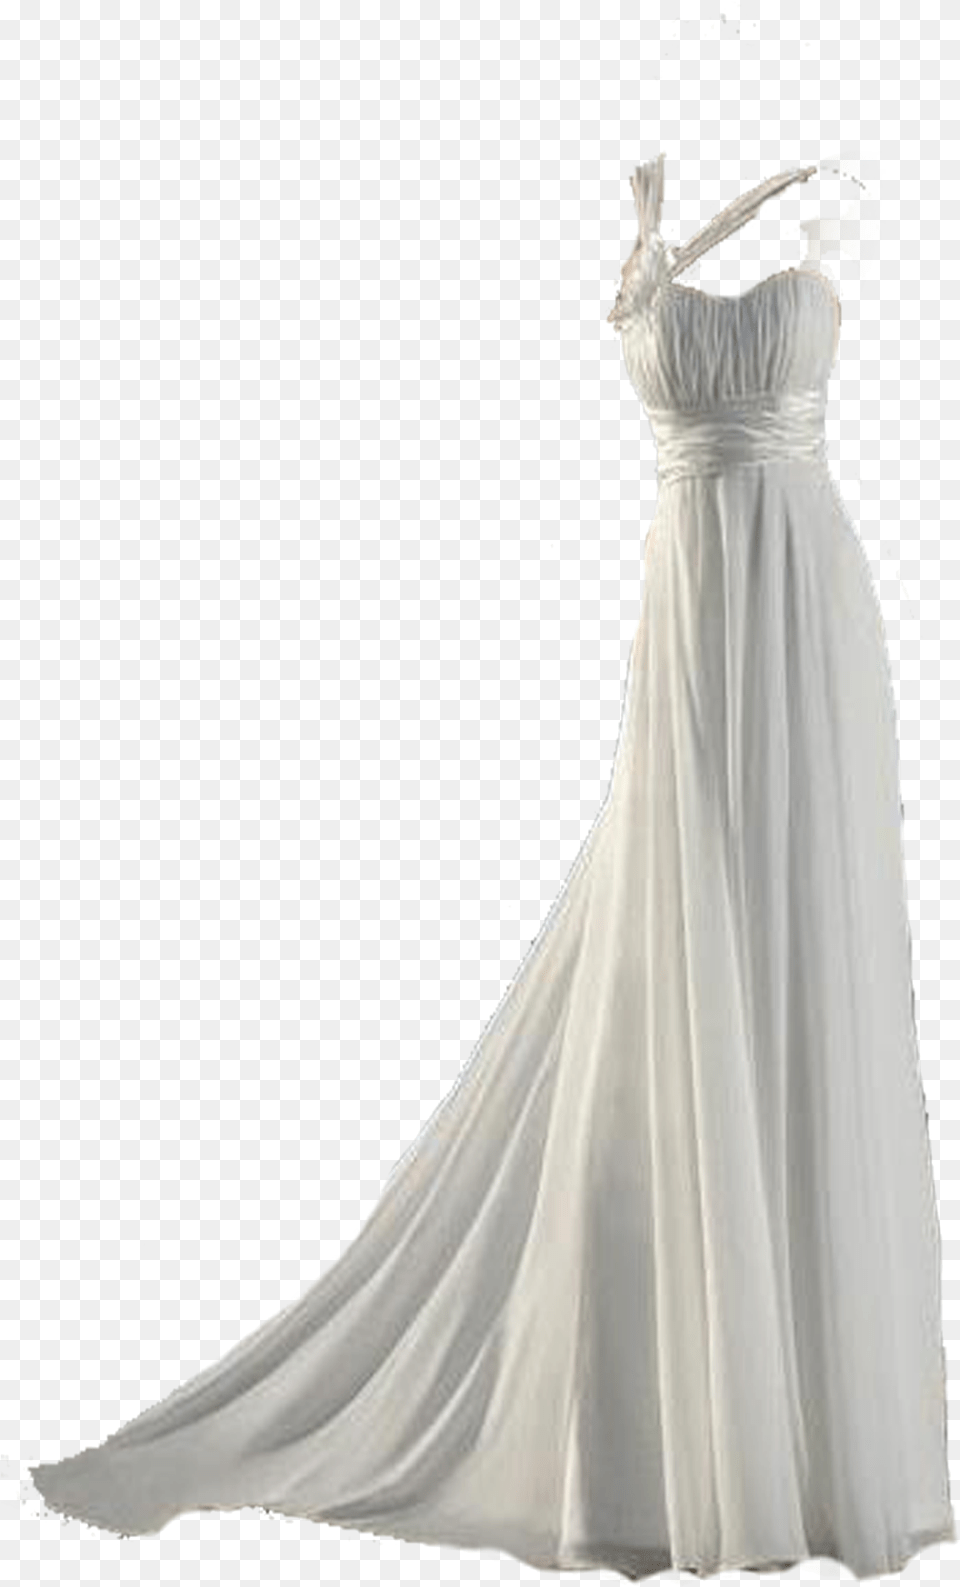 Wedding Dress Gown Clothing Formal Wear Formal Dress Transparent Background, Fashion, Formal Wear, Wedding Gown Png